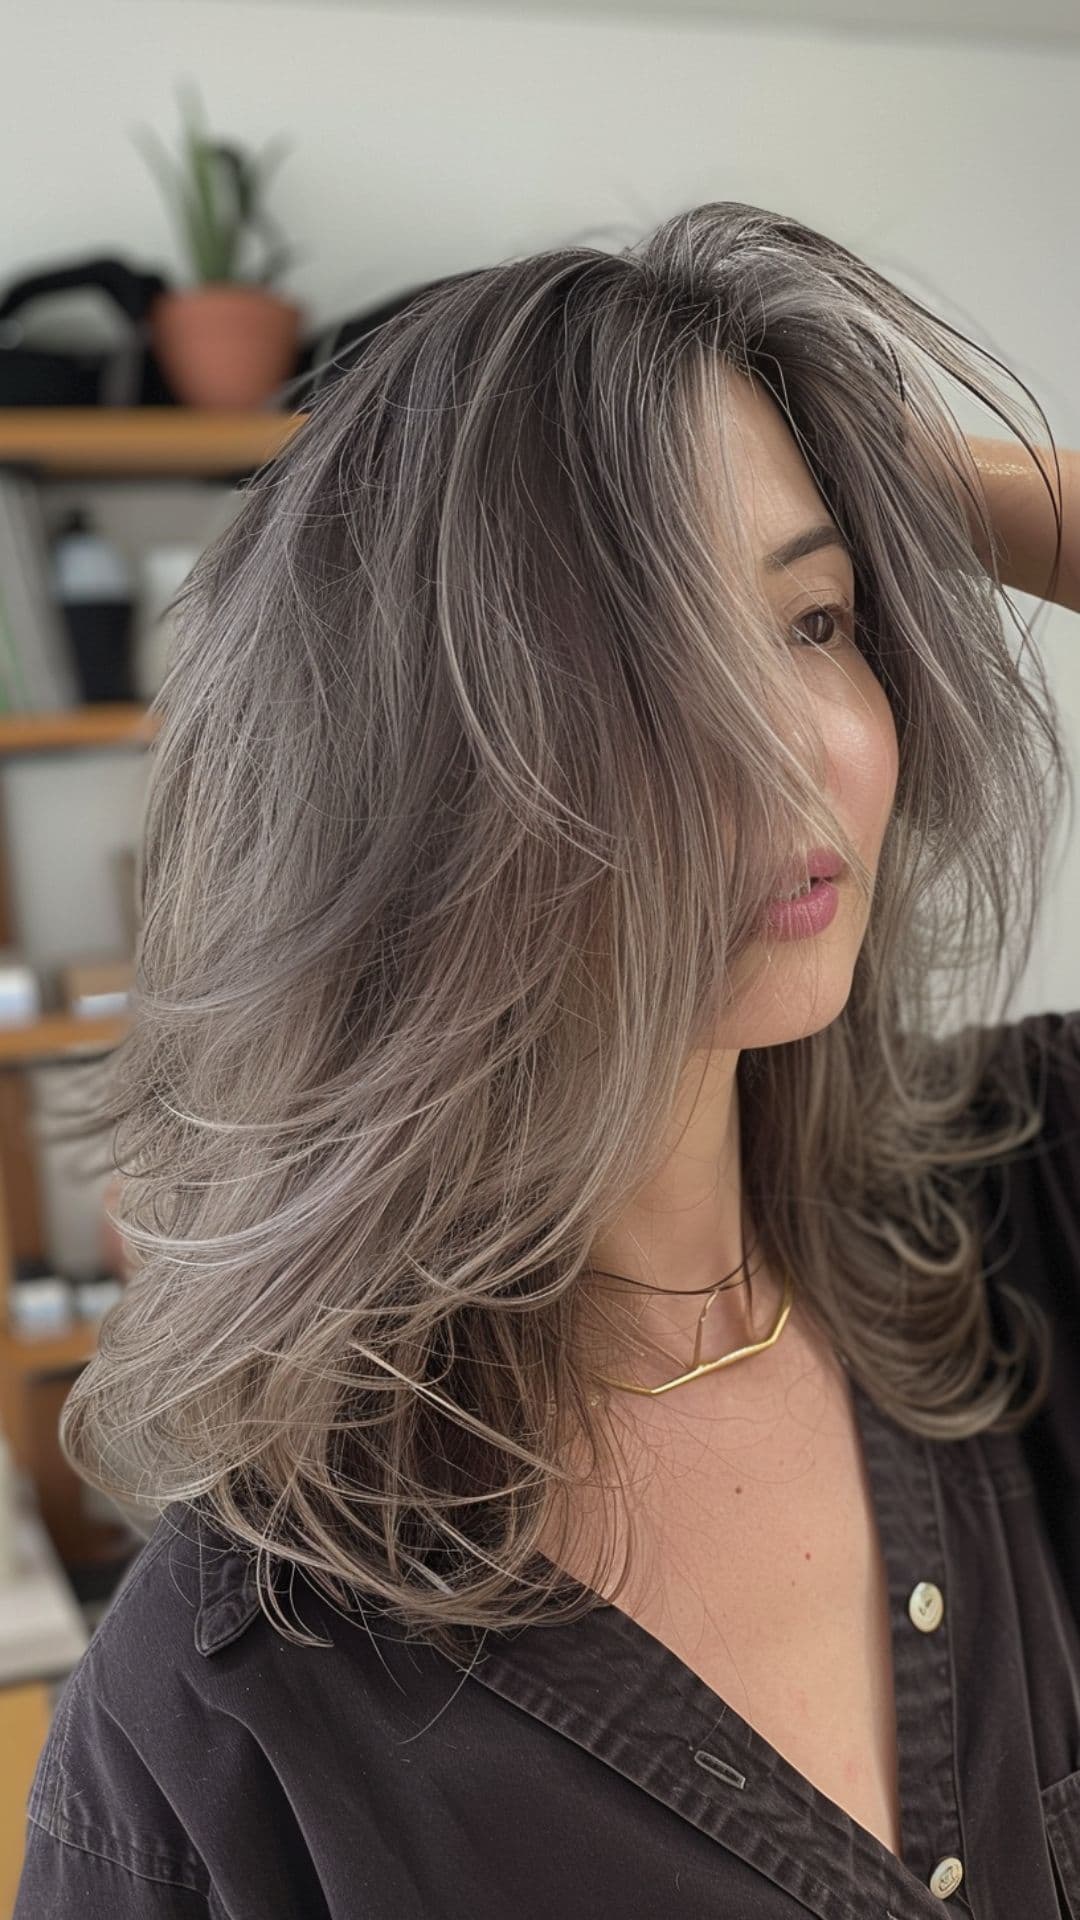 A woman modelling a steel gray hair.